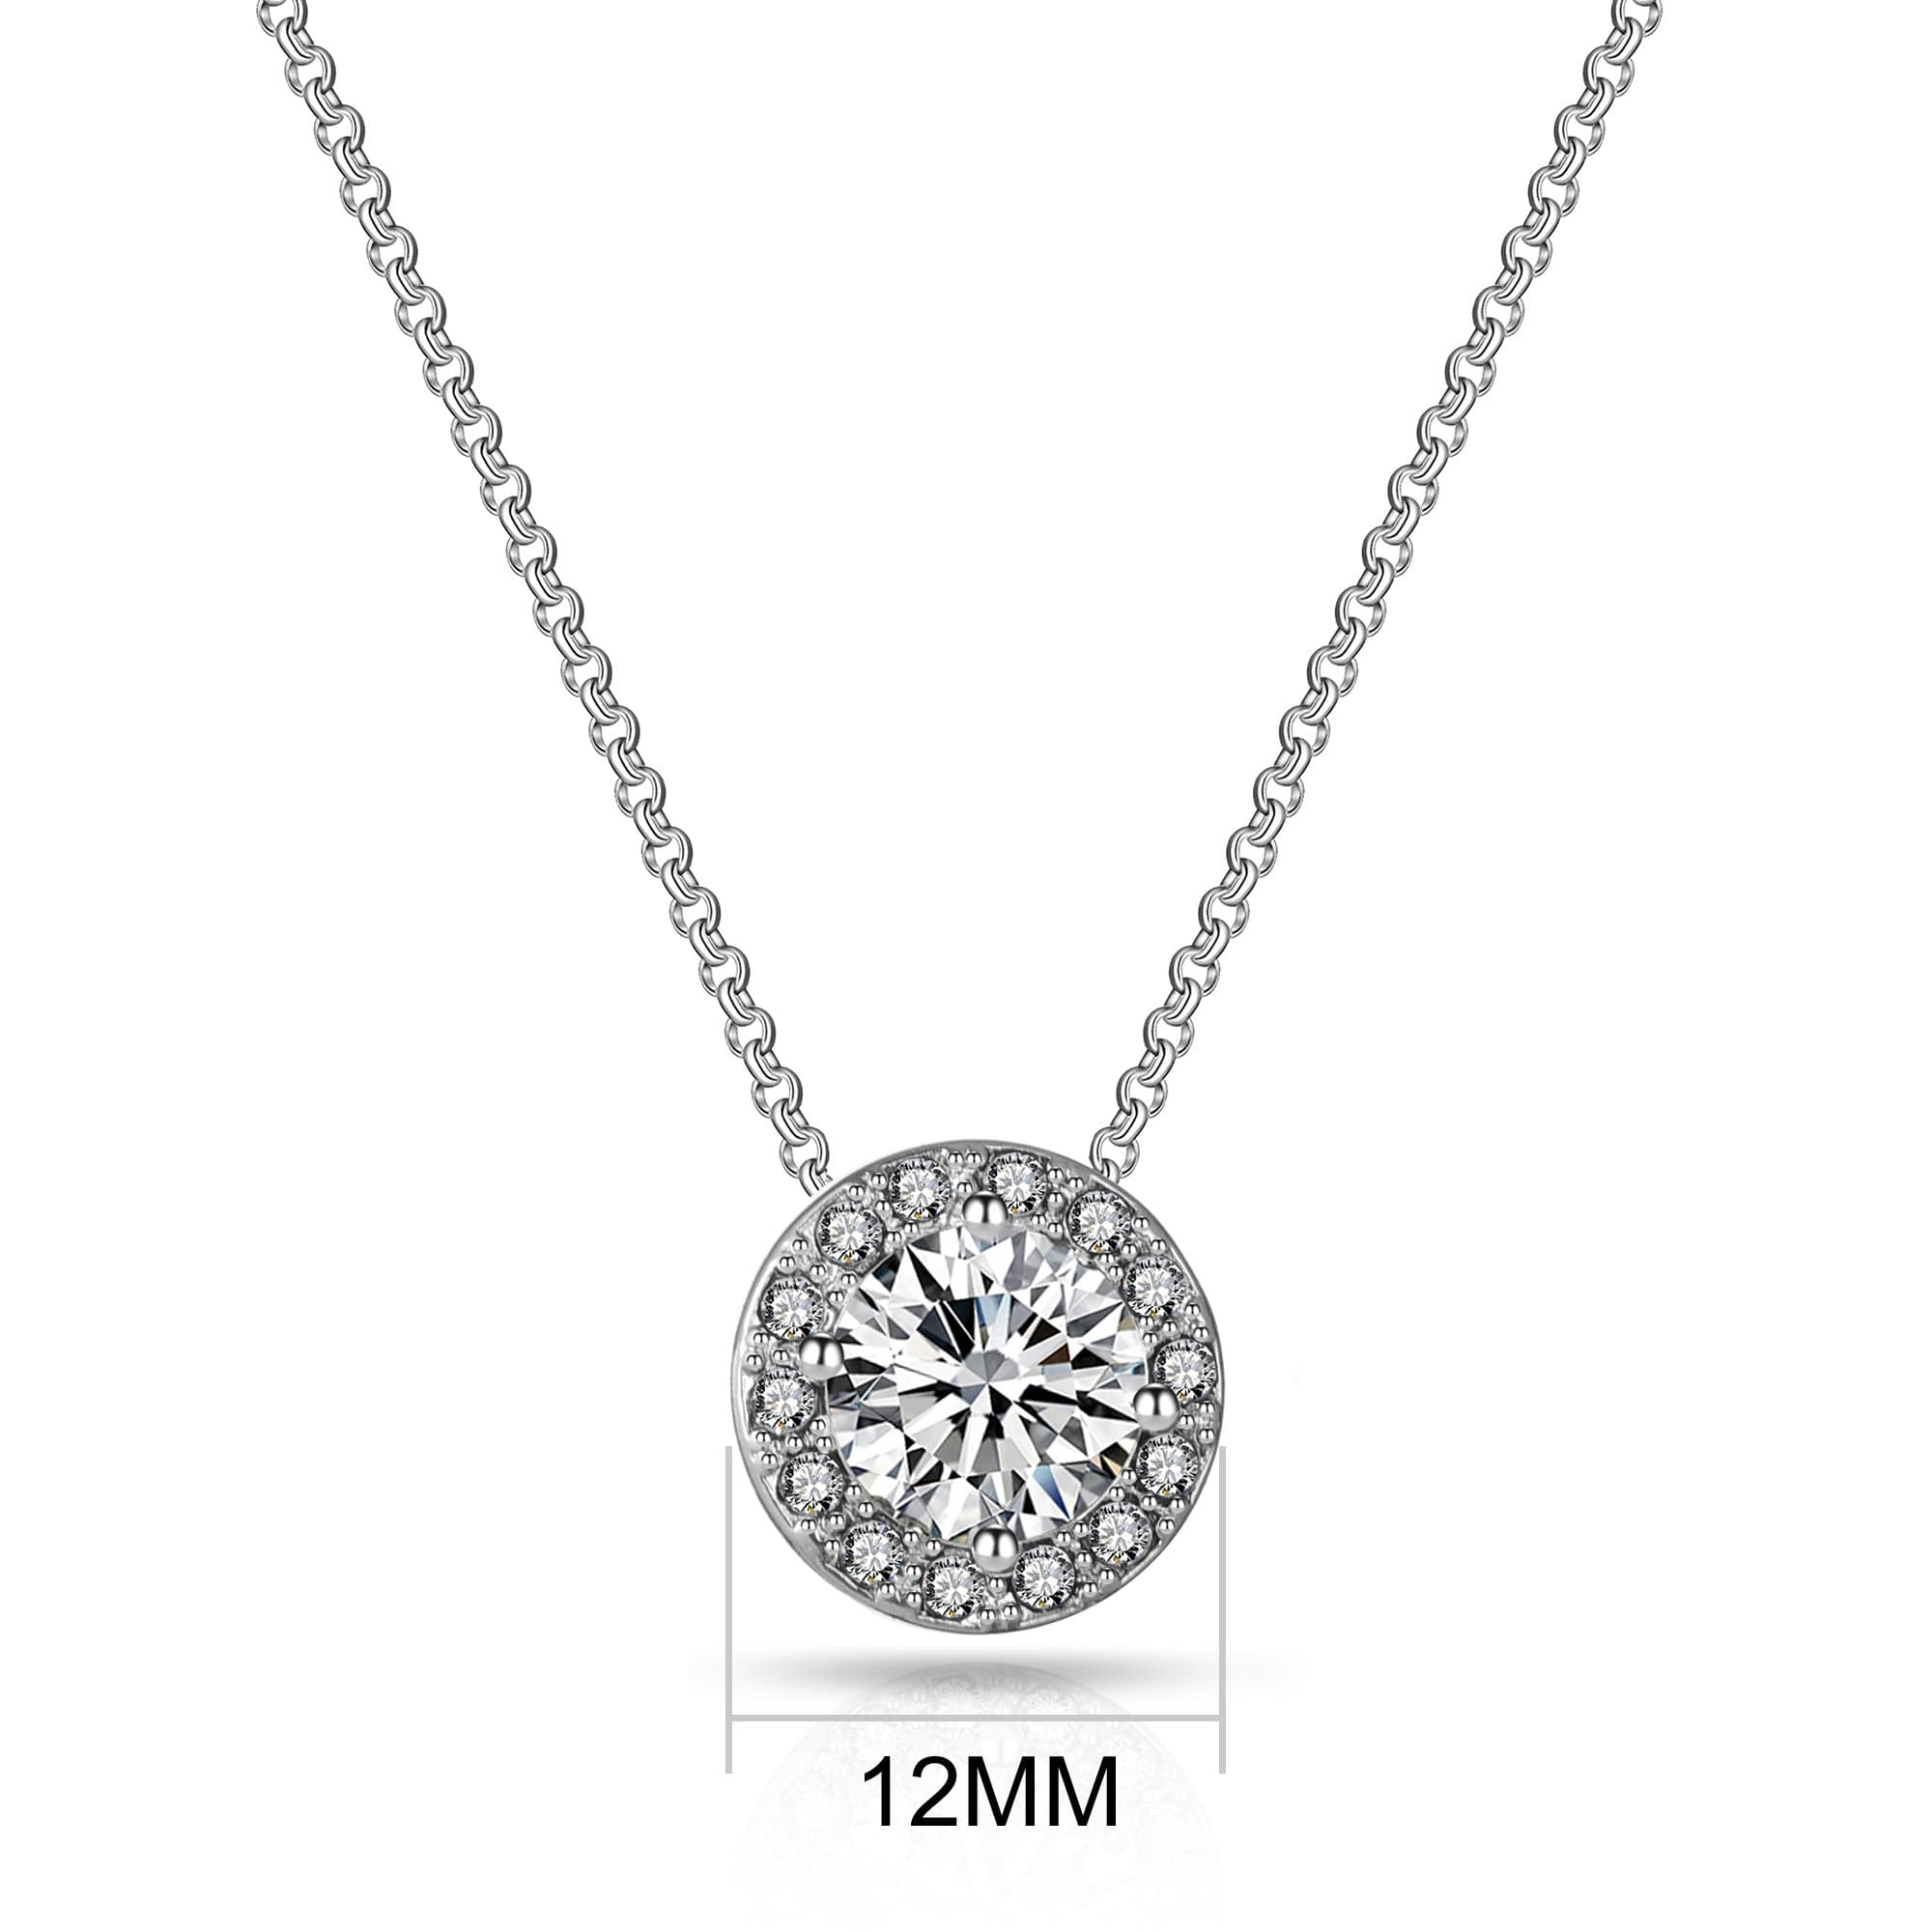 Halo Necklace Created with Zircondia® Crystals